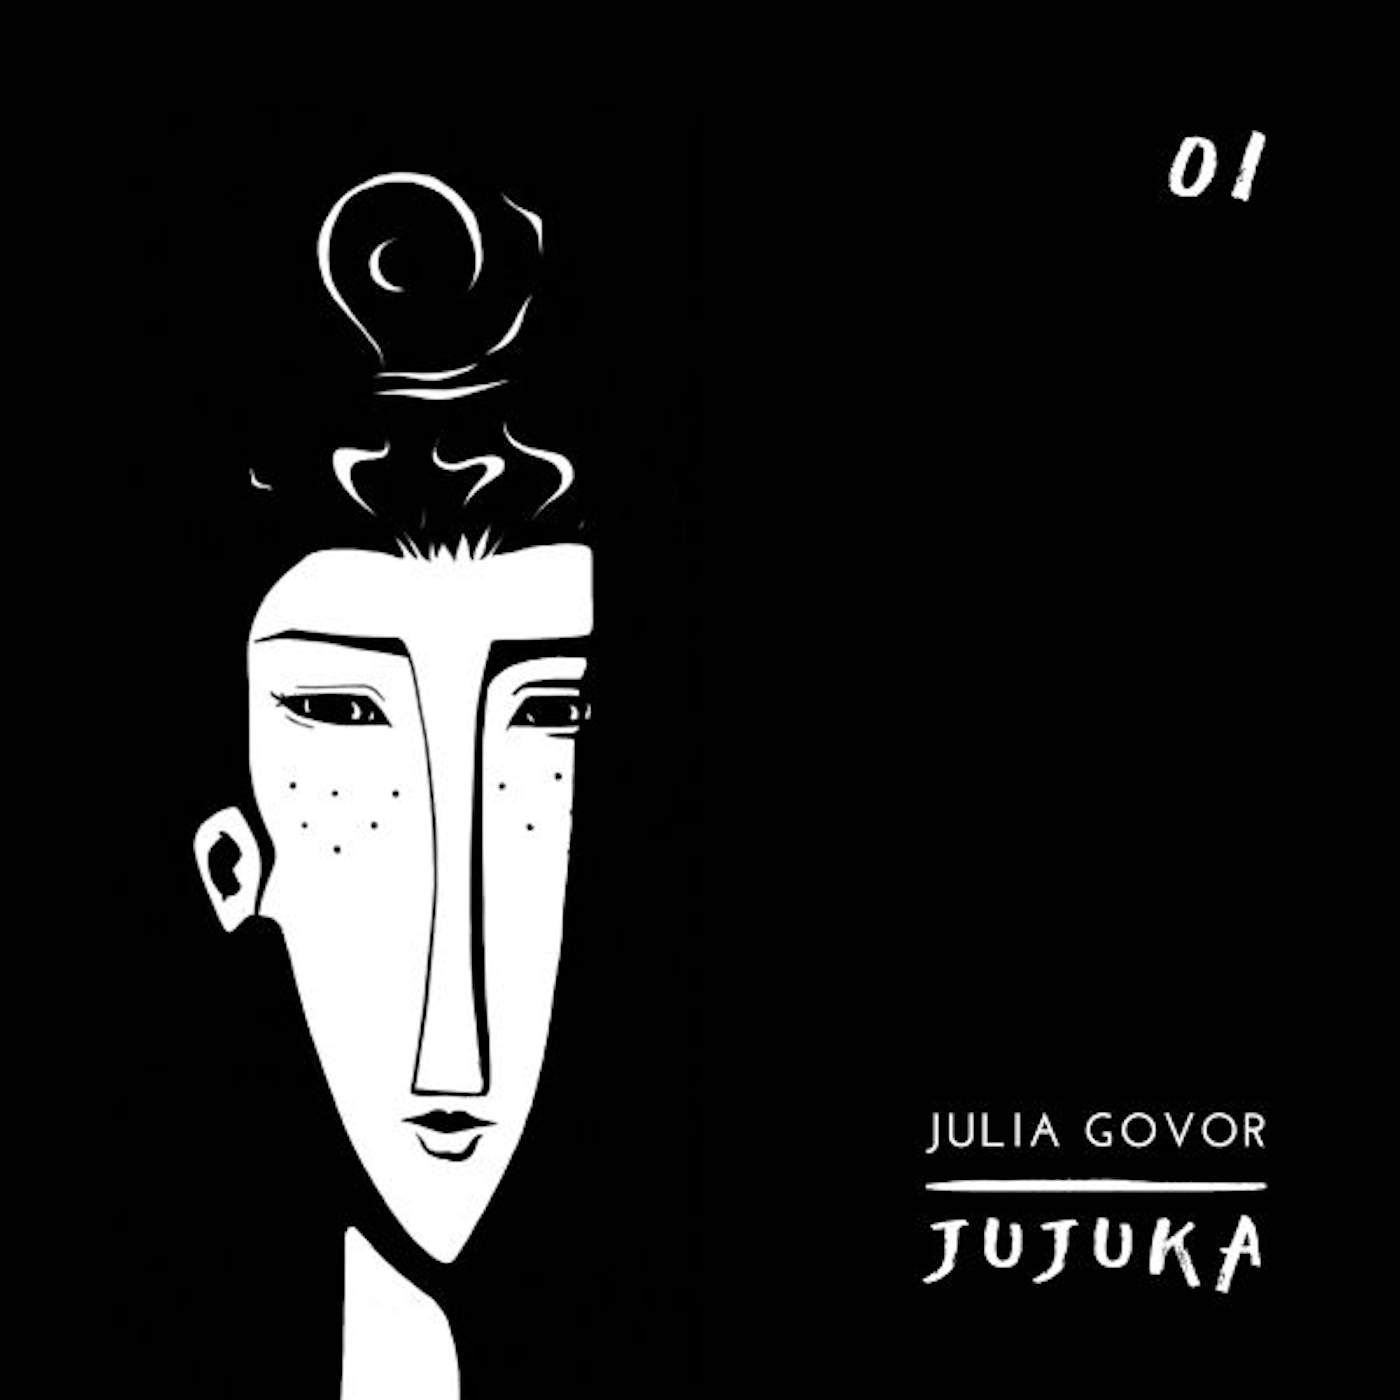 Julia Govor 001 Vinyl Record